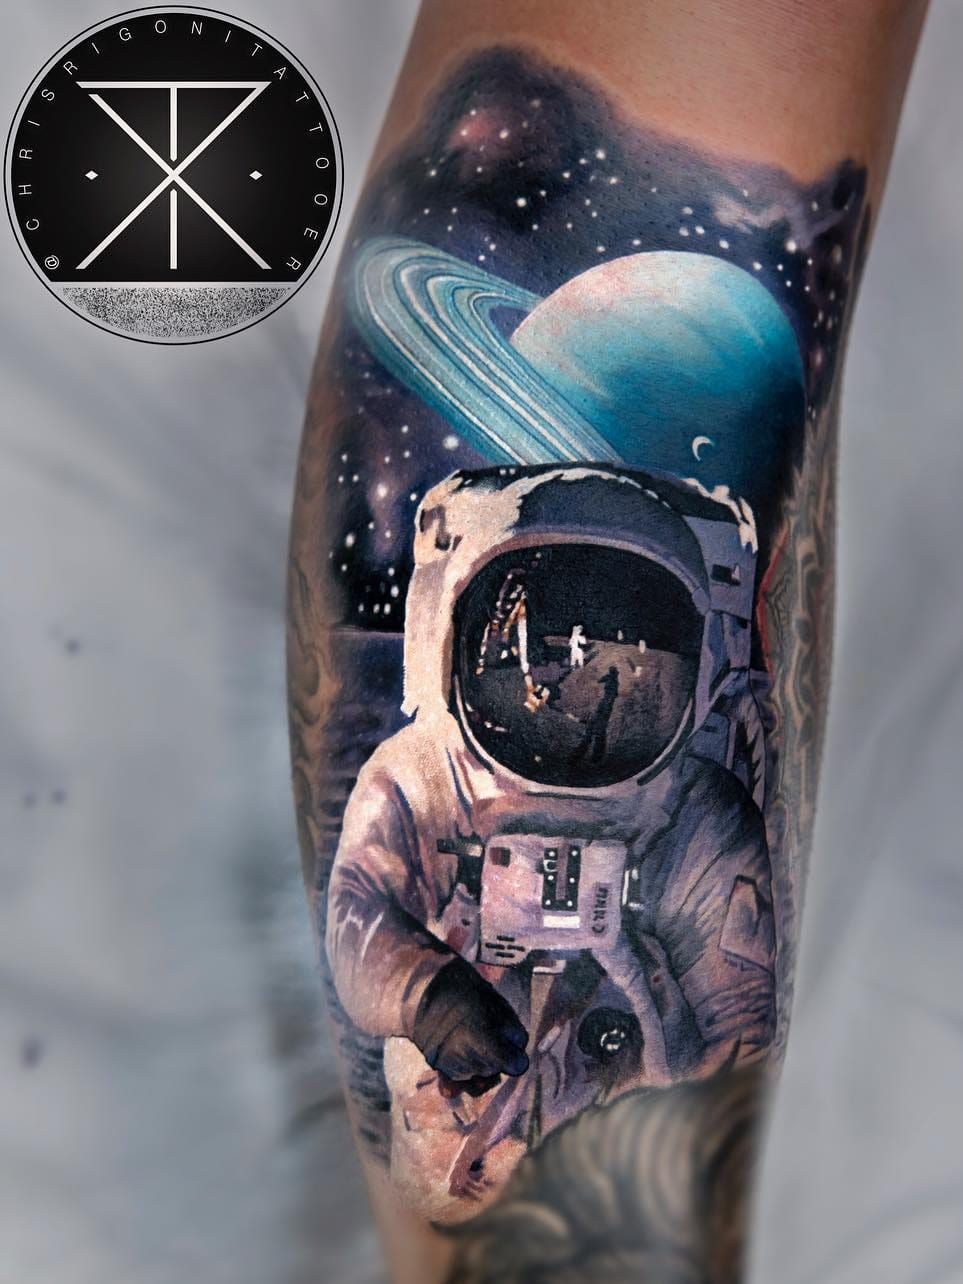 Astronaut half sleeve done by Brandon  Stabbyzz Ink  Toronto Canada  r tattoos